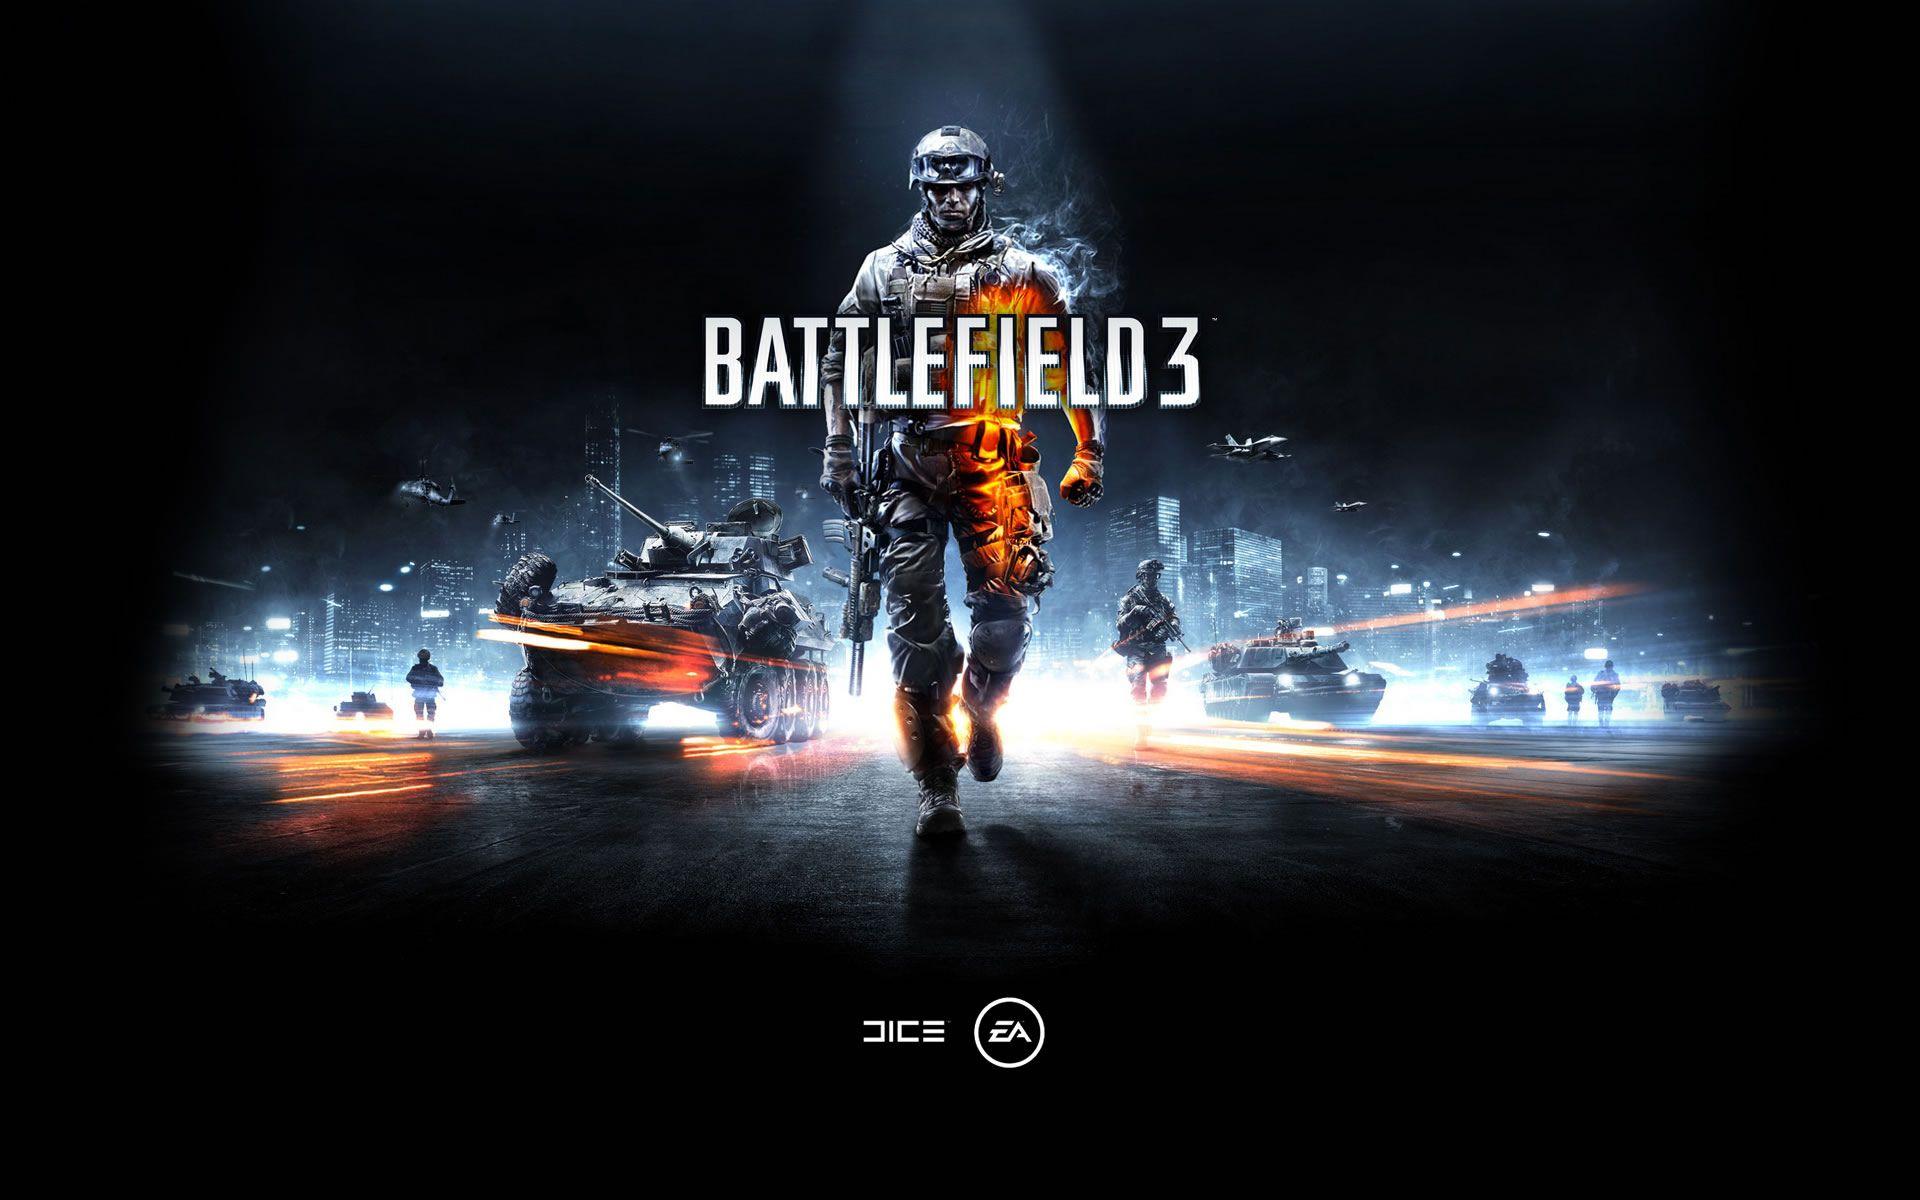 Battlefield 3 Wallpapers - Top Free Battlefield 3 Backgrounds ...